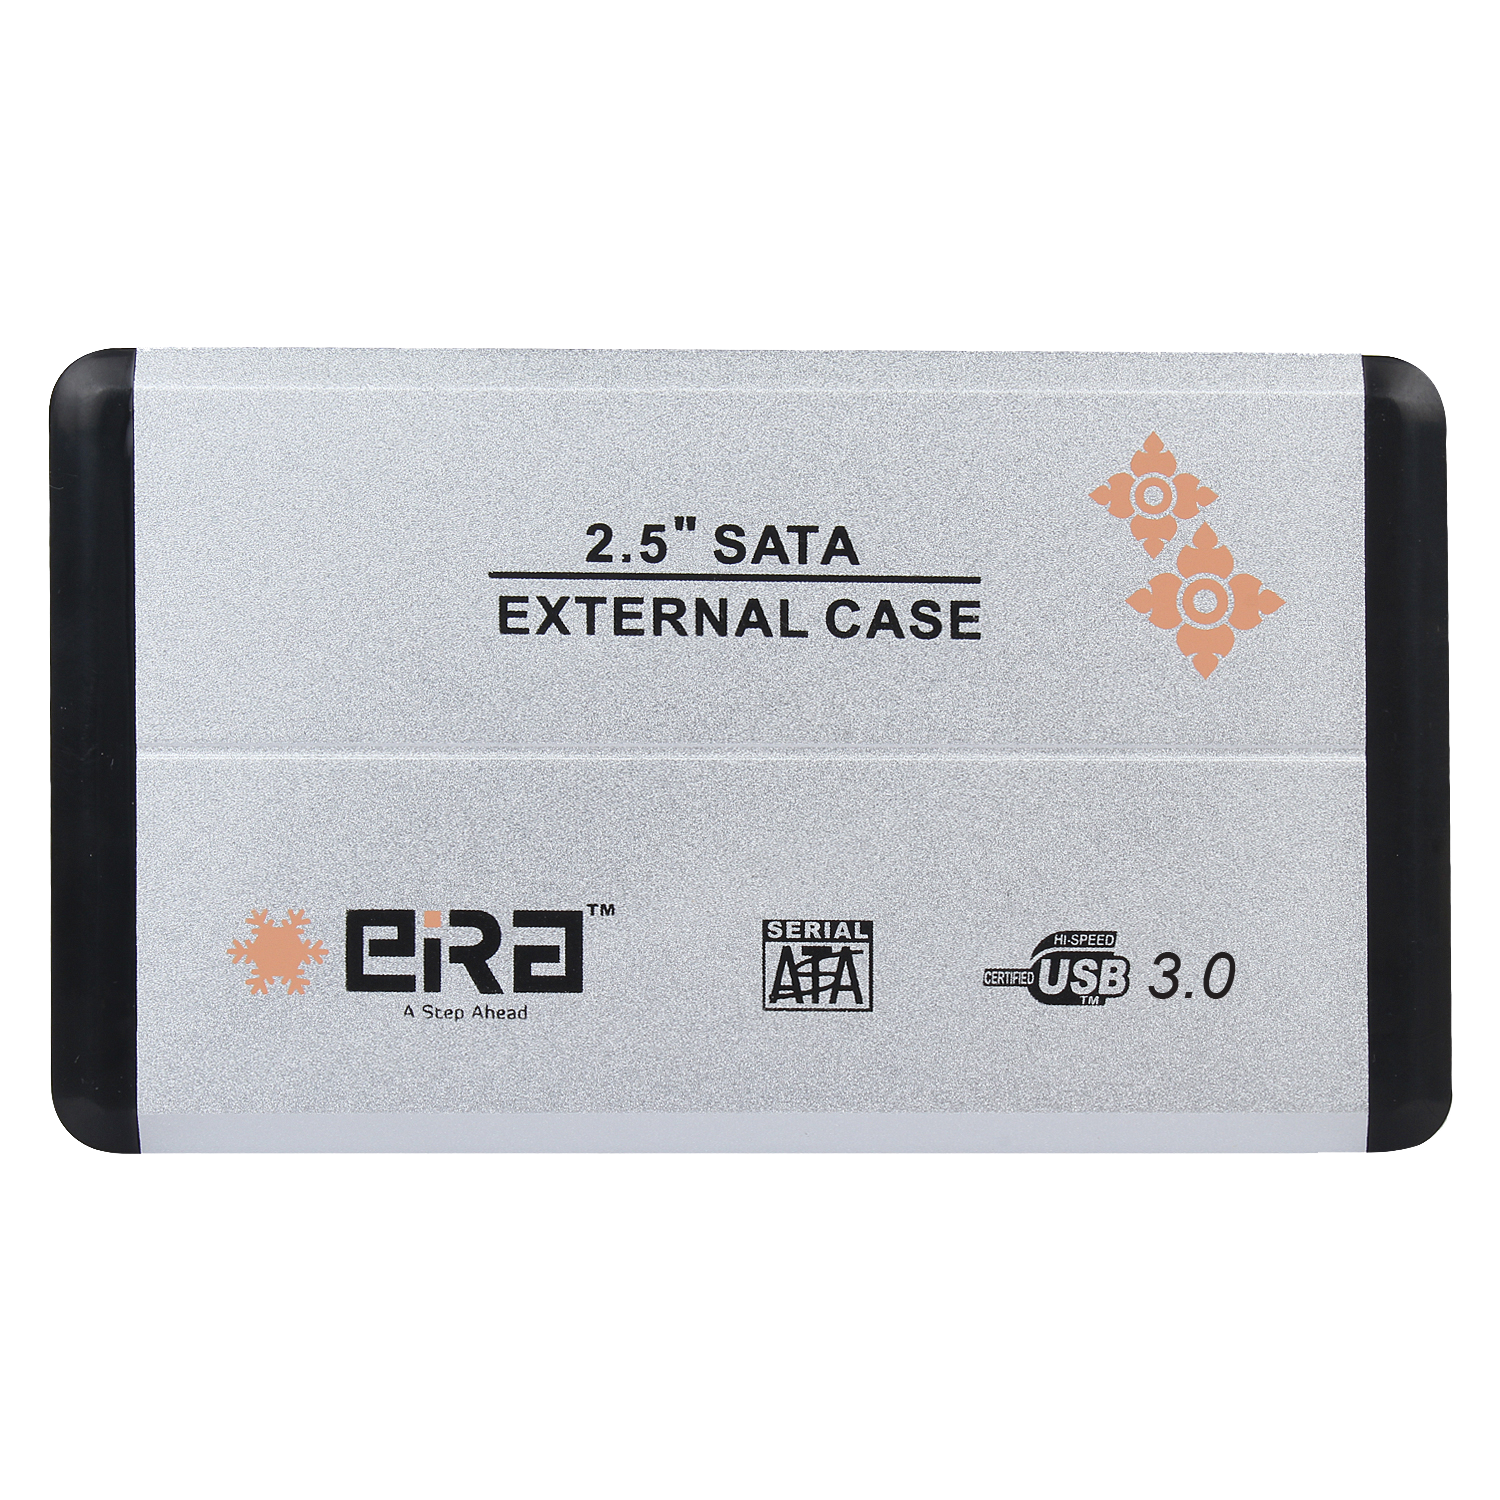 2.5 SATA CASING (USB 3.0) - LX, SILVER